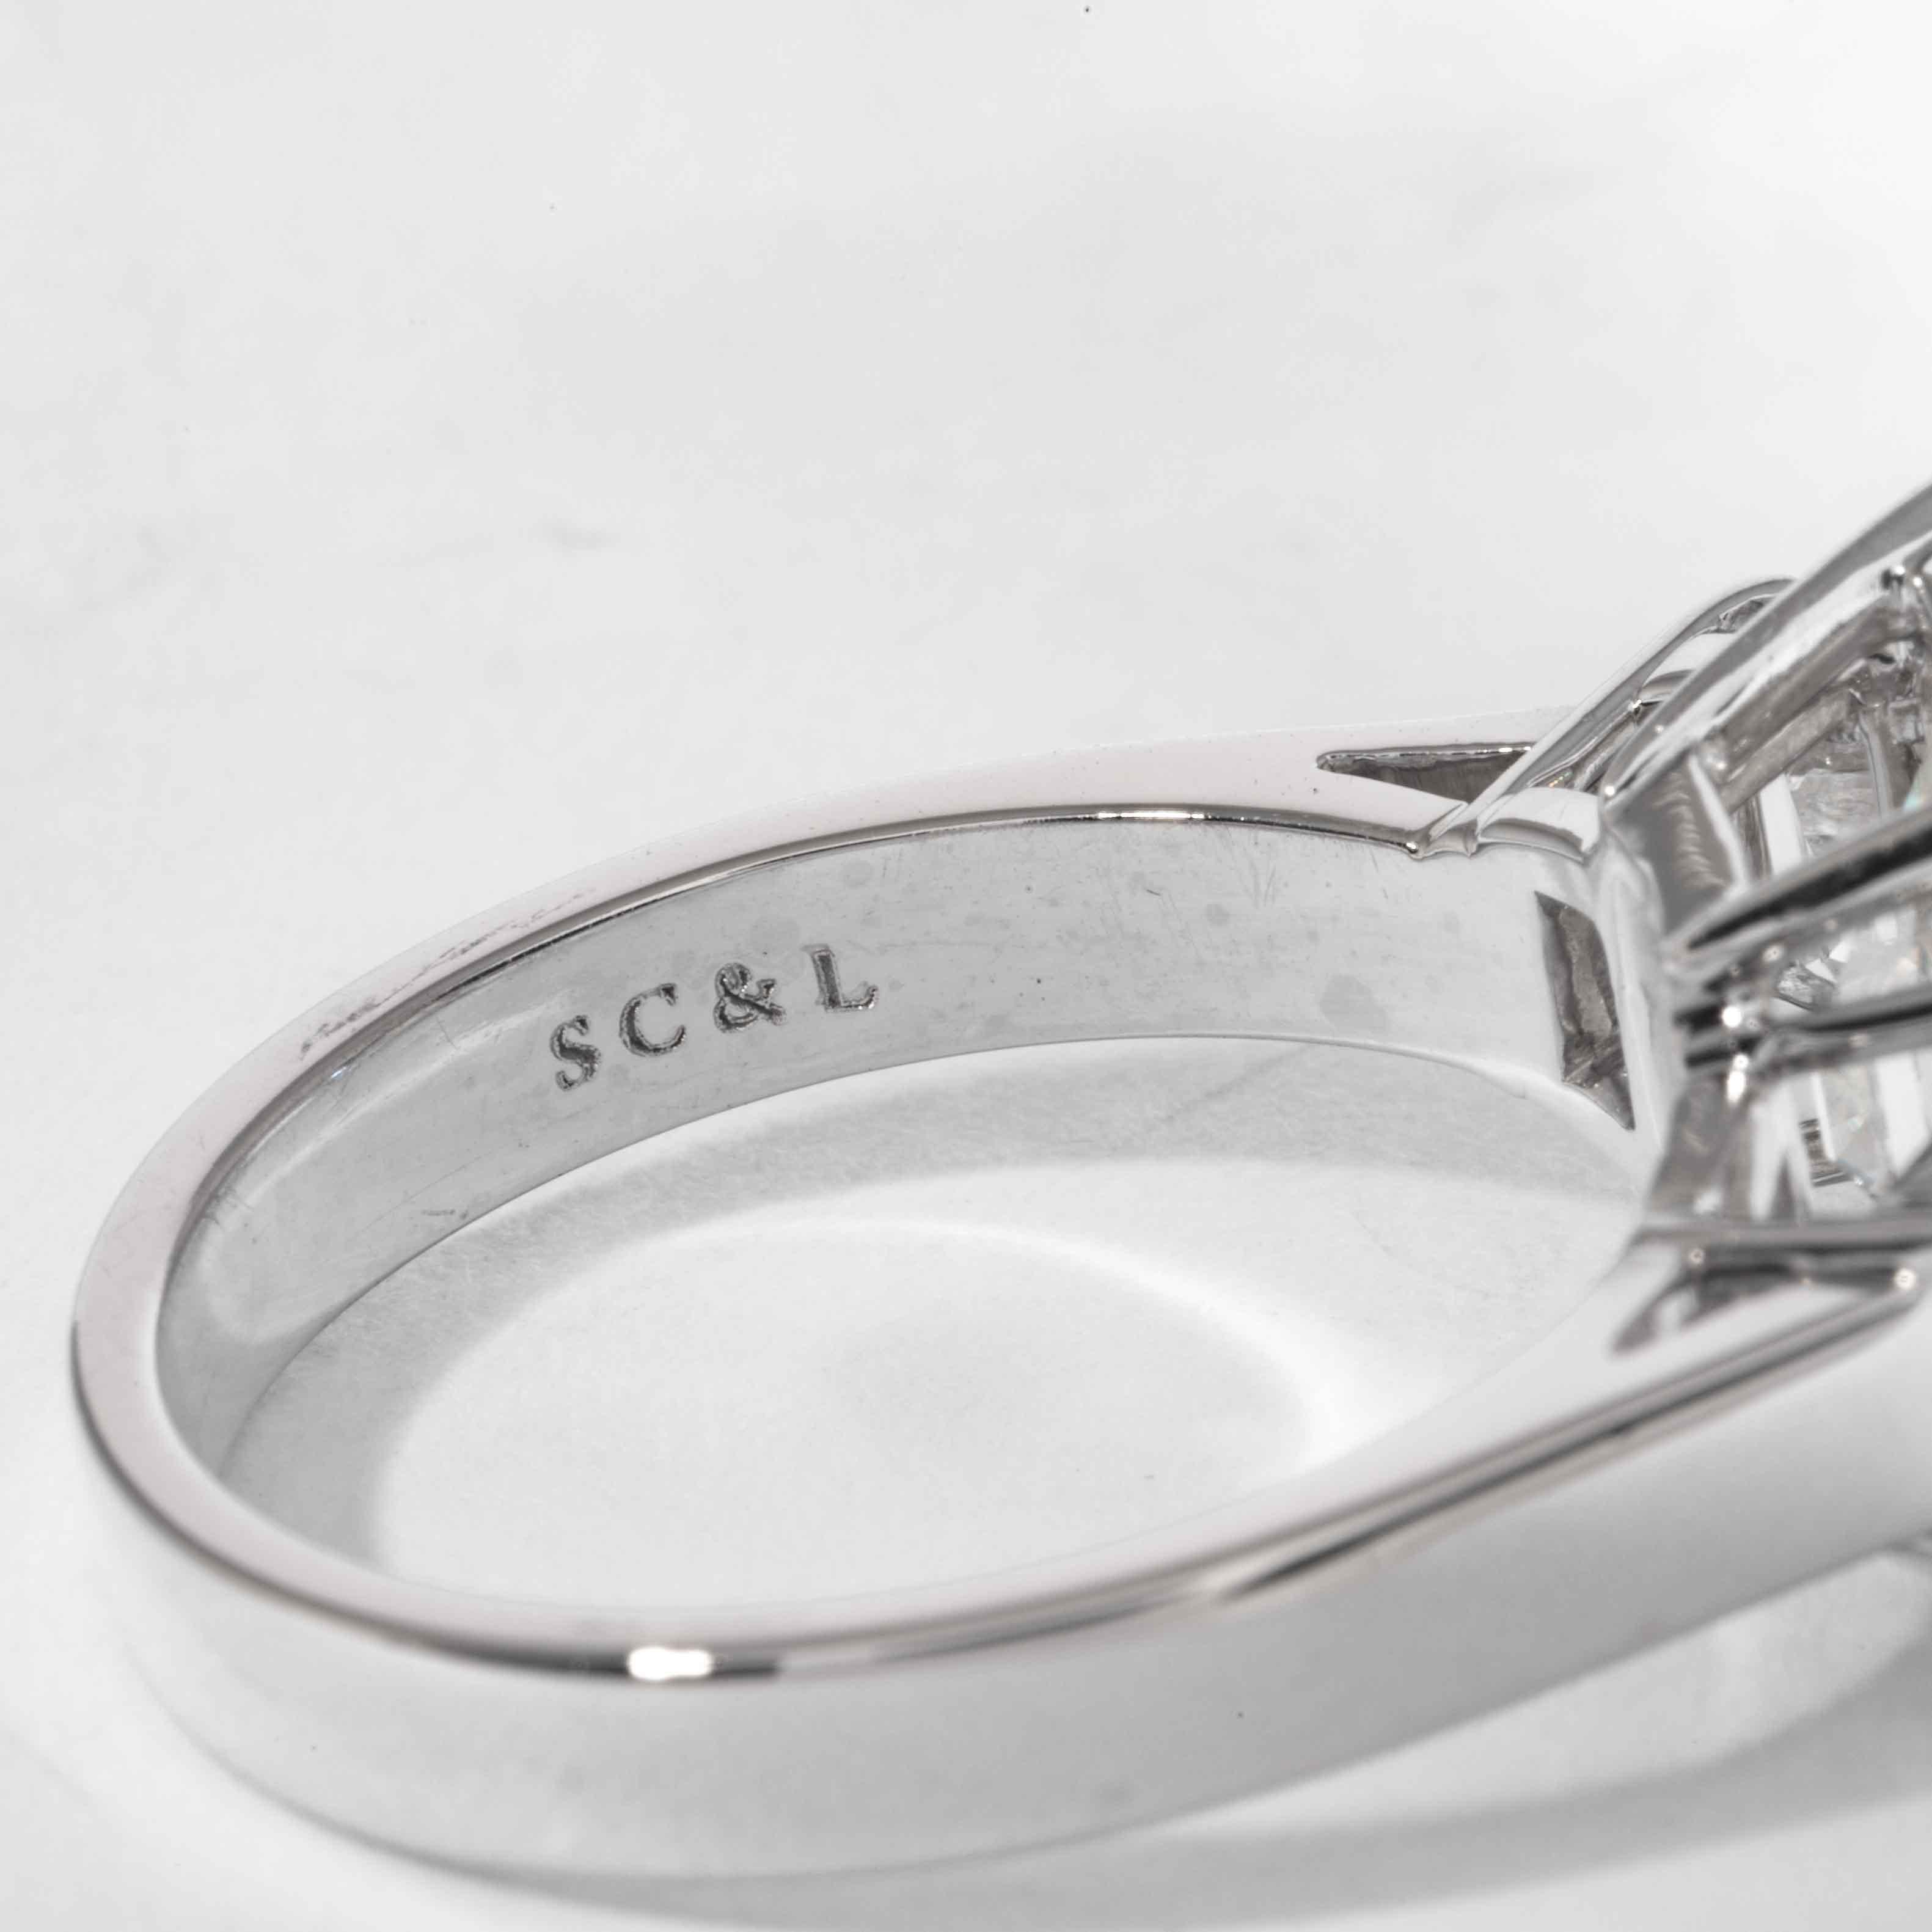 Shreve, Crump & Low GIA Certified 5.13 Carat J VS2 Emerald Cut Diamond Plat Ring For Sale 1